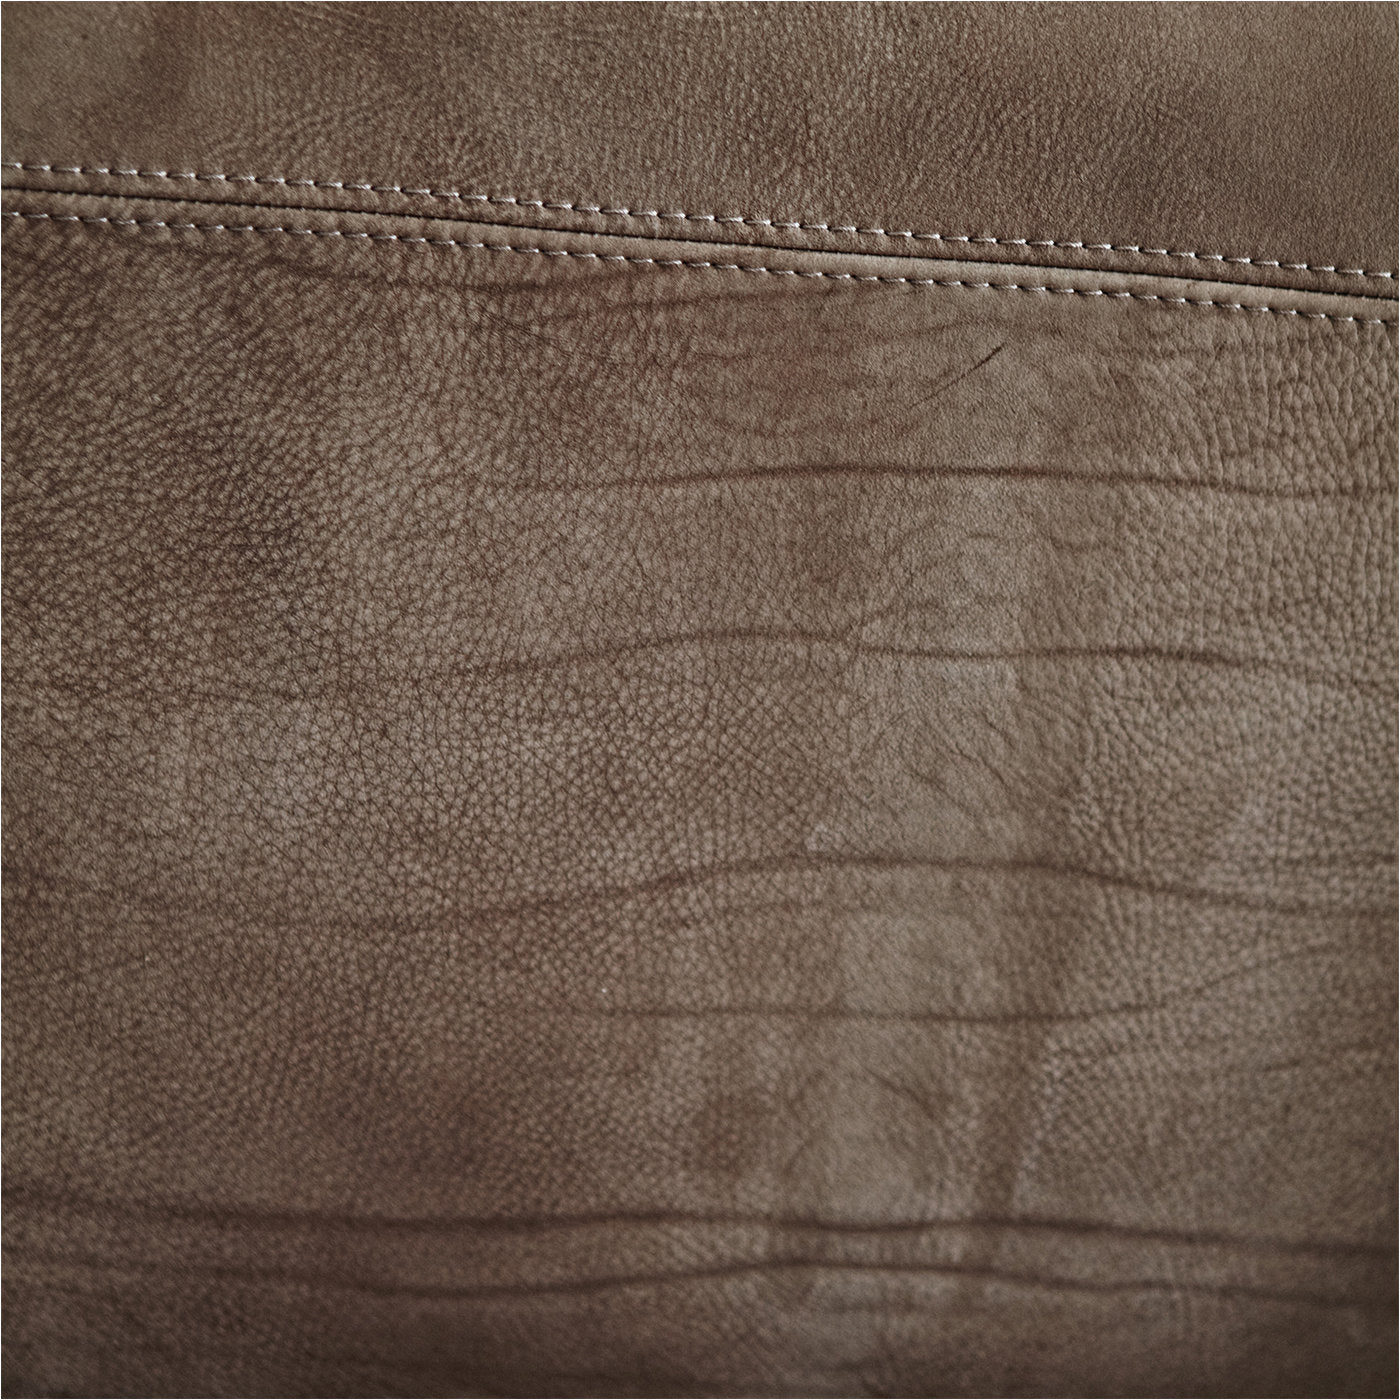 Traco Natural Gray Leather Sofa by Paolo Capello - Alternative view 4